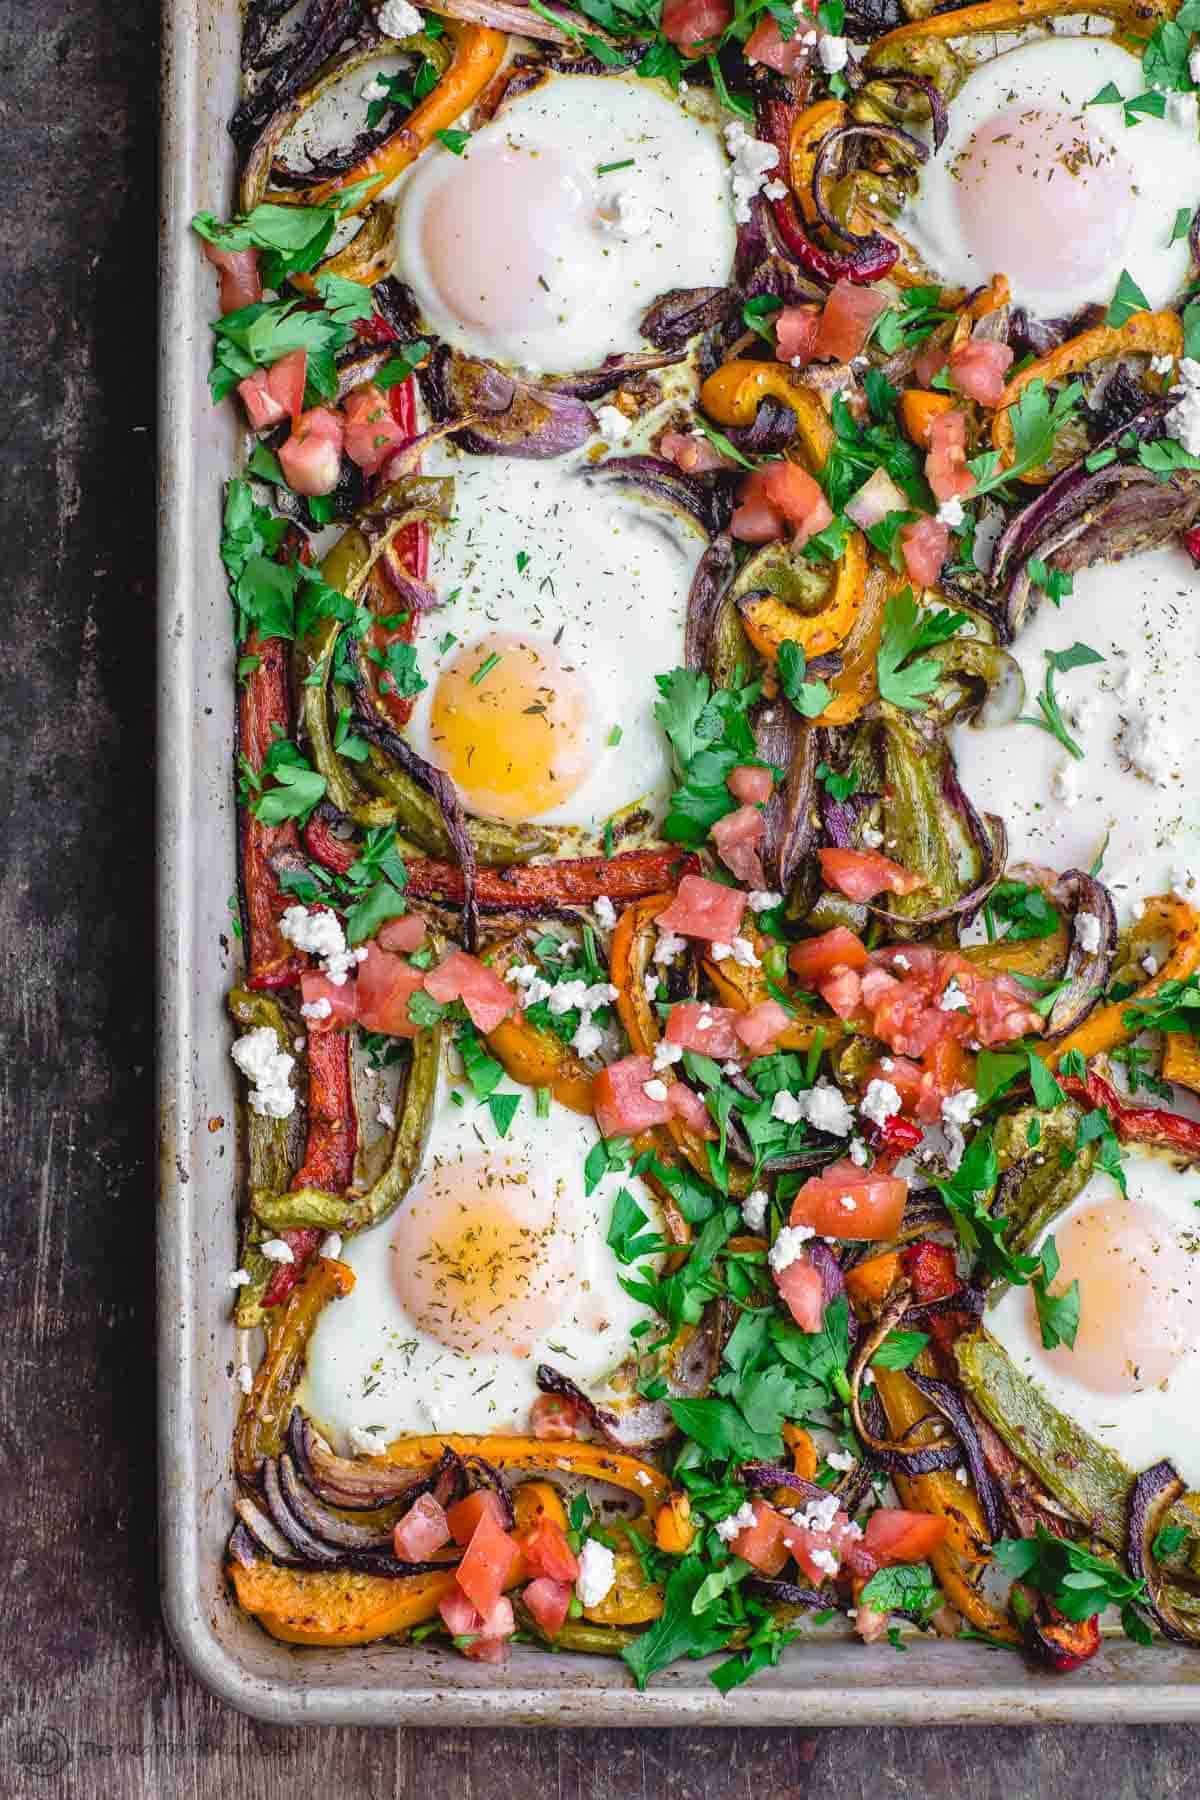 https://www.themediterraneandish.com/wp-content/uploads/2019/03/Baked-Eggs-and-Vegetables-Sheet-Pan-5.jpg